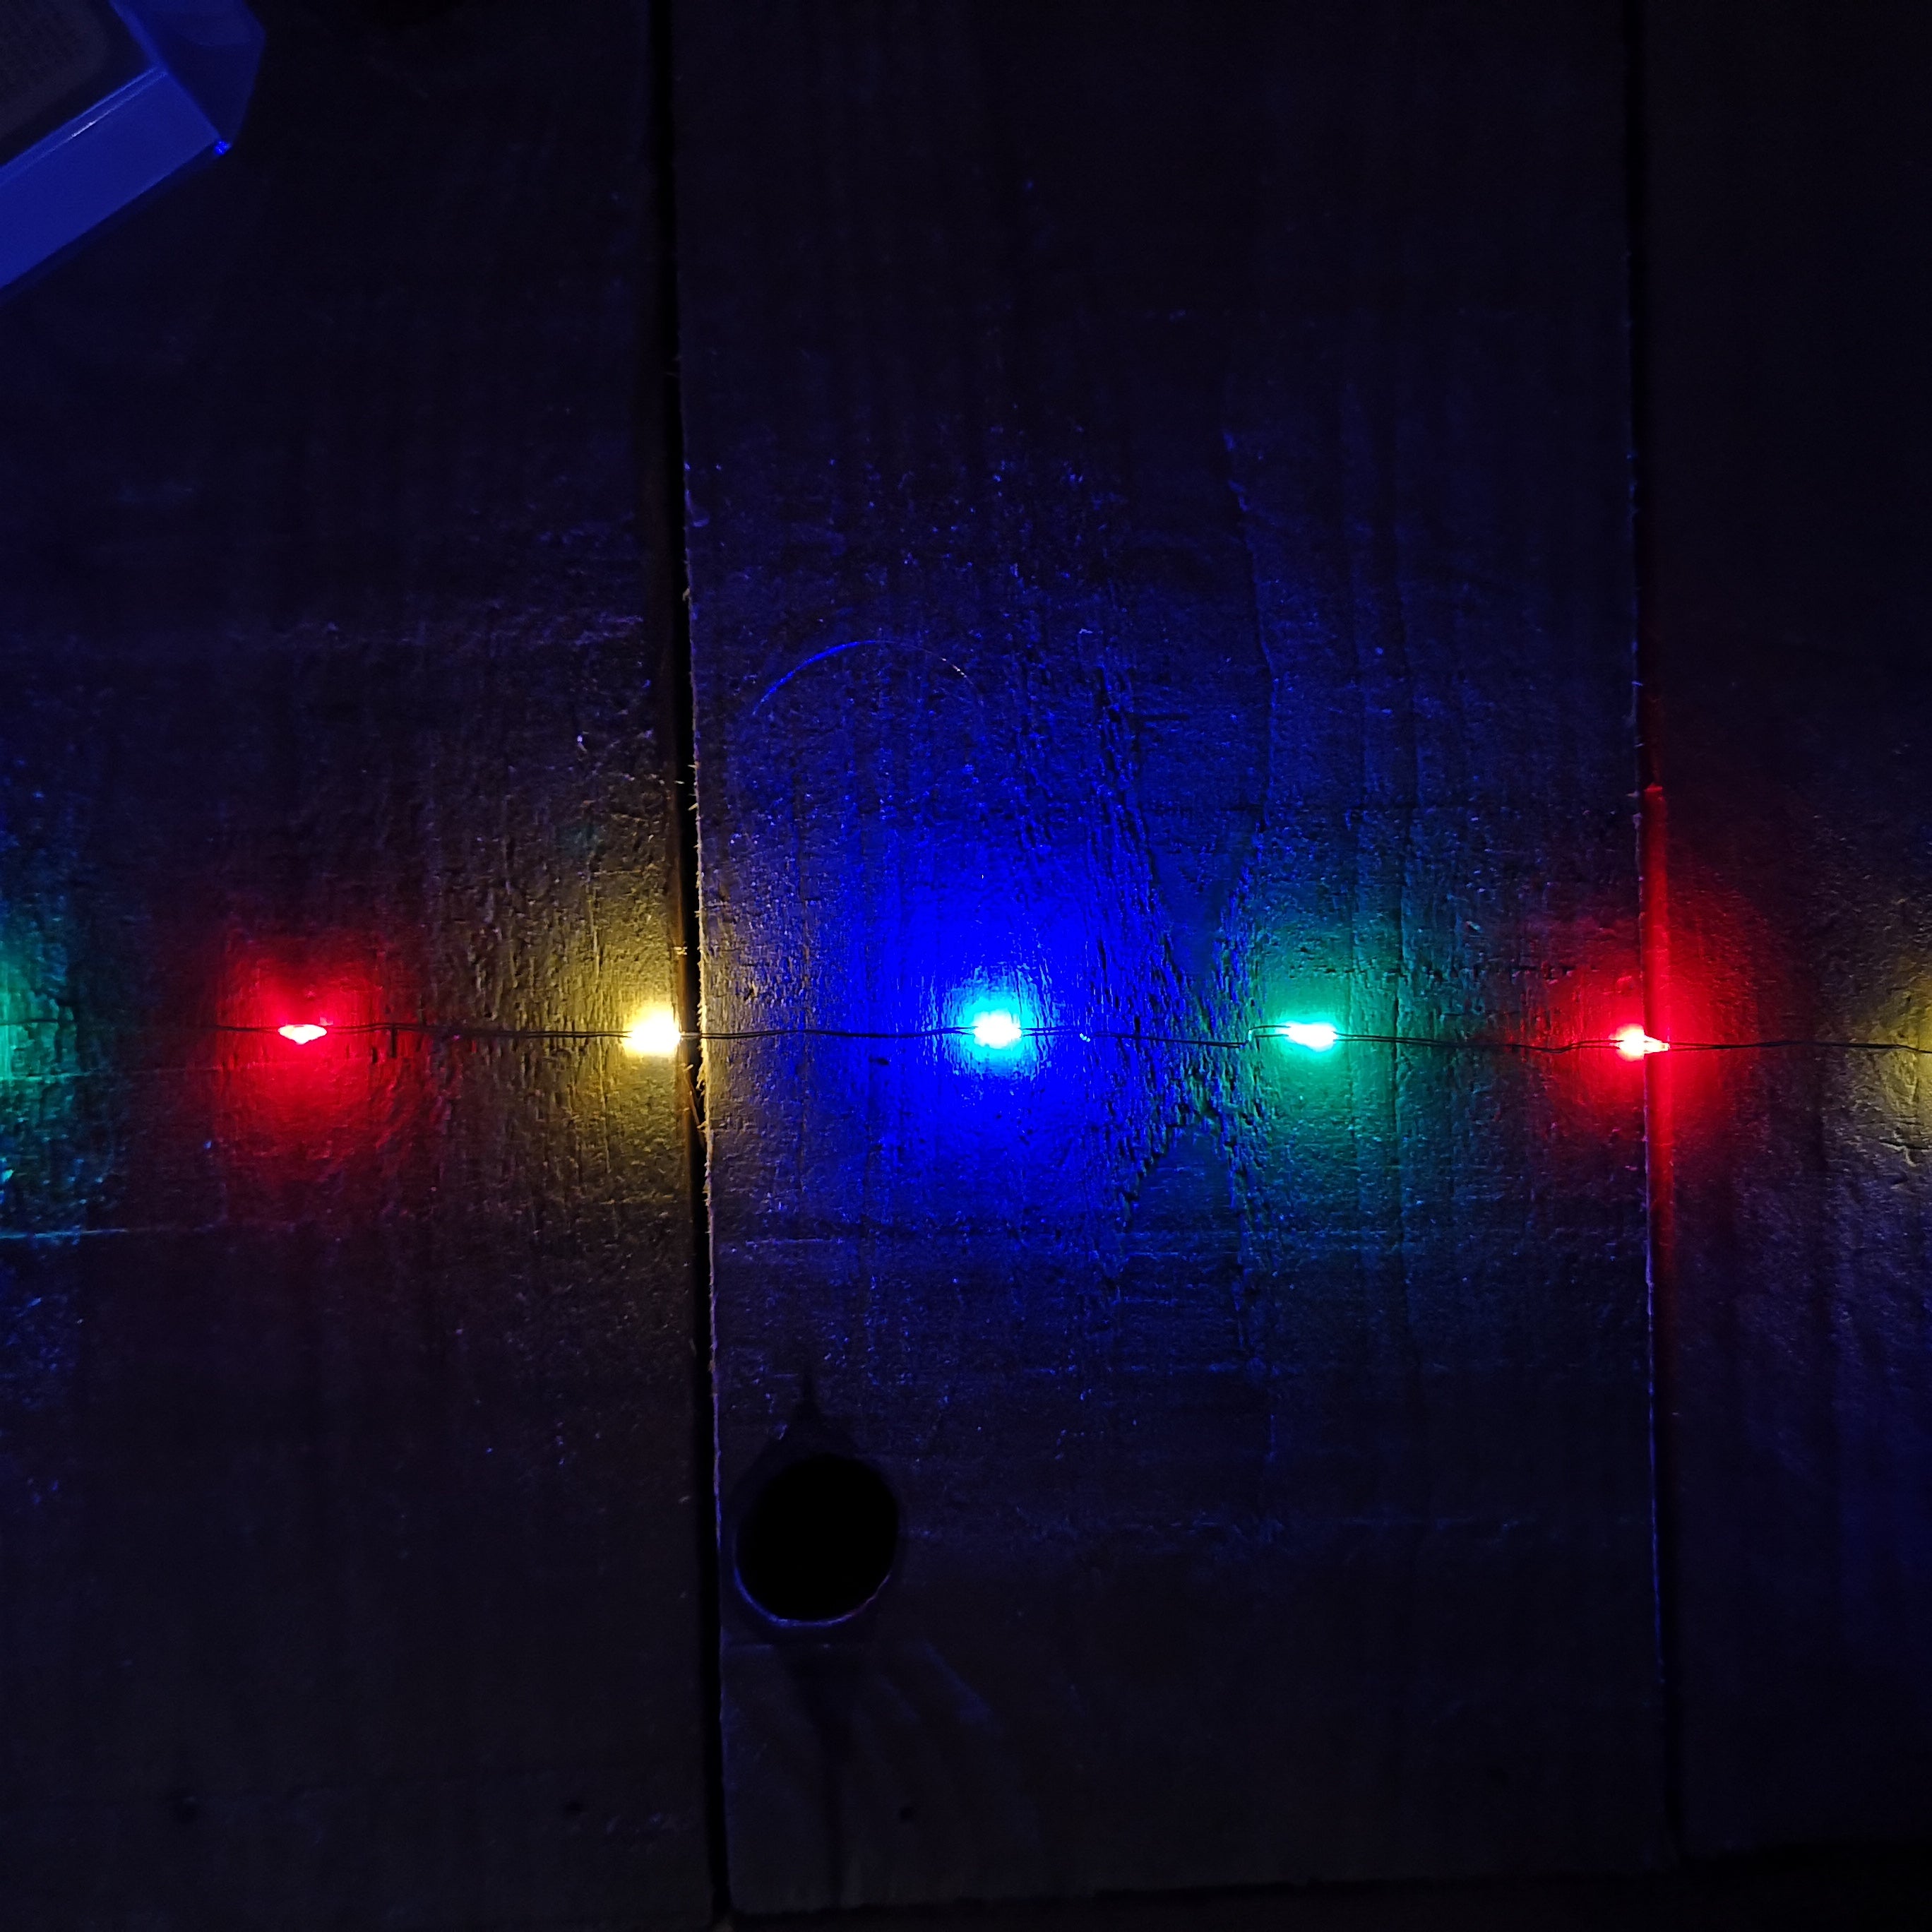 5m 100 Micro-LED Christmas String Lights - Multicoloured